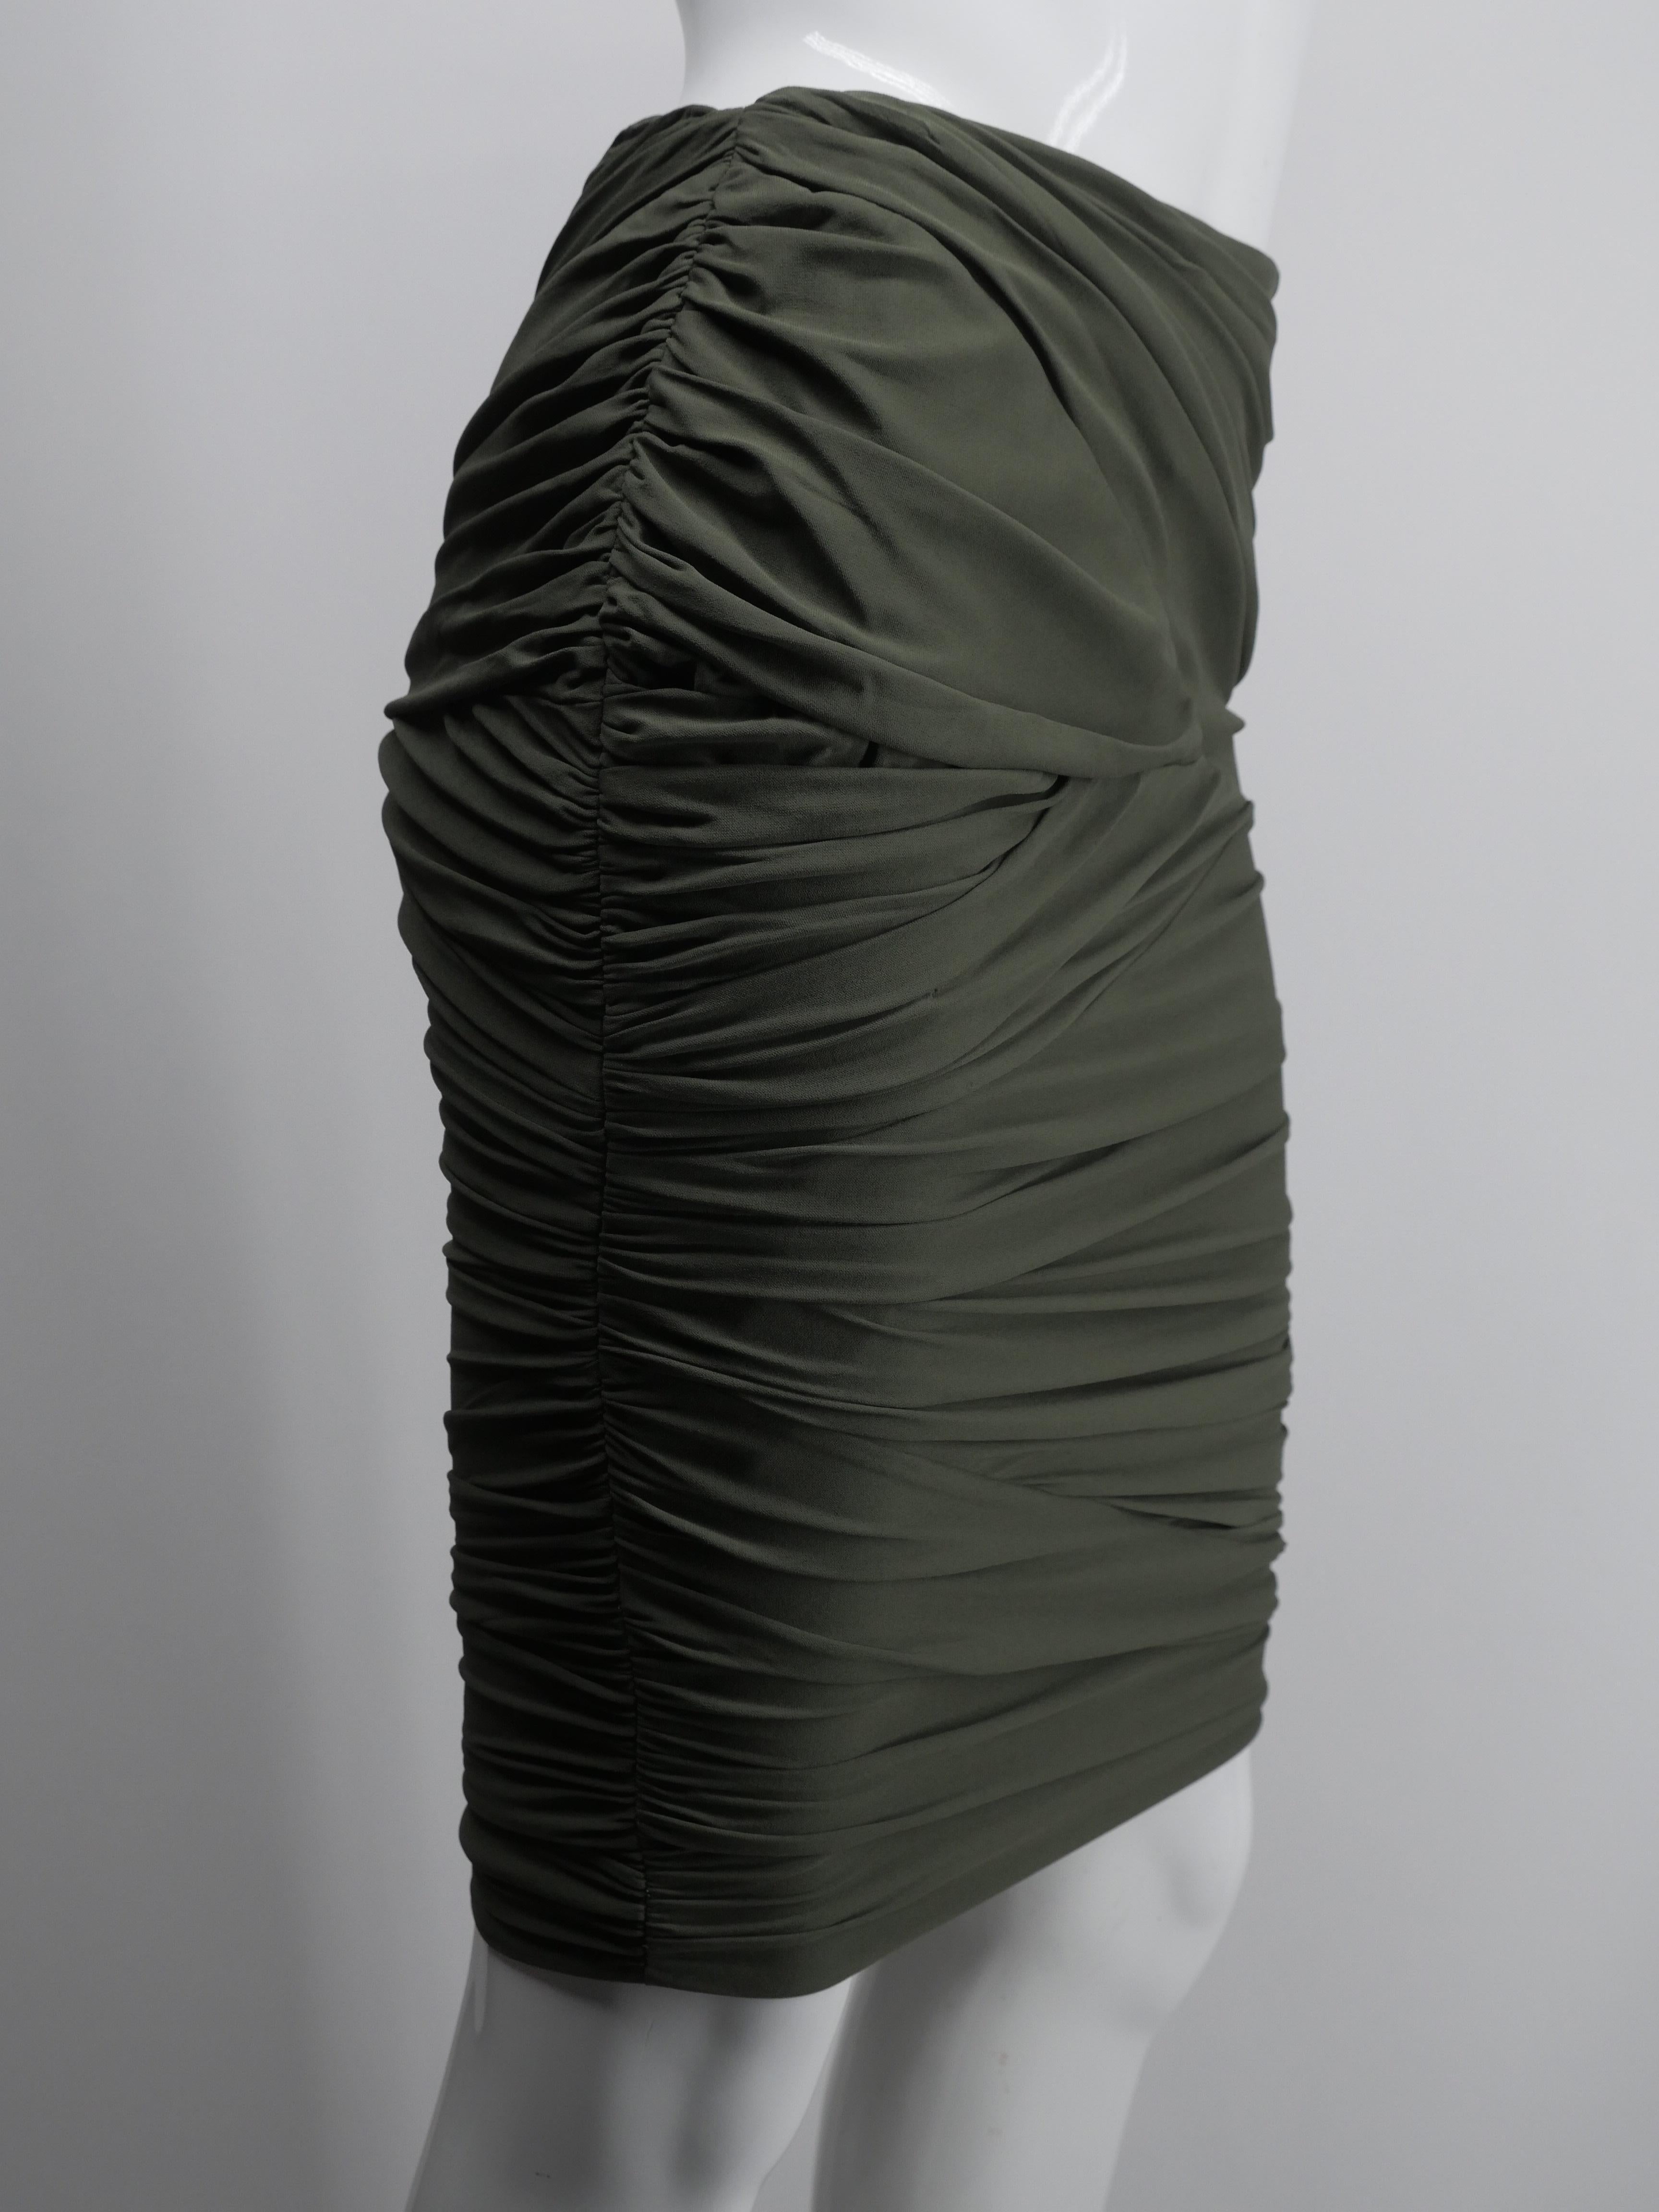 Ralph Lauren Black Label Size 6 Olive Green Ruched Skirt 7